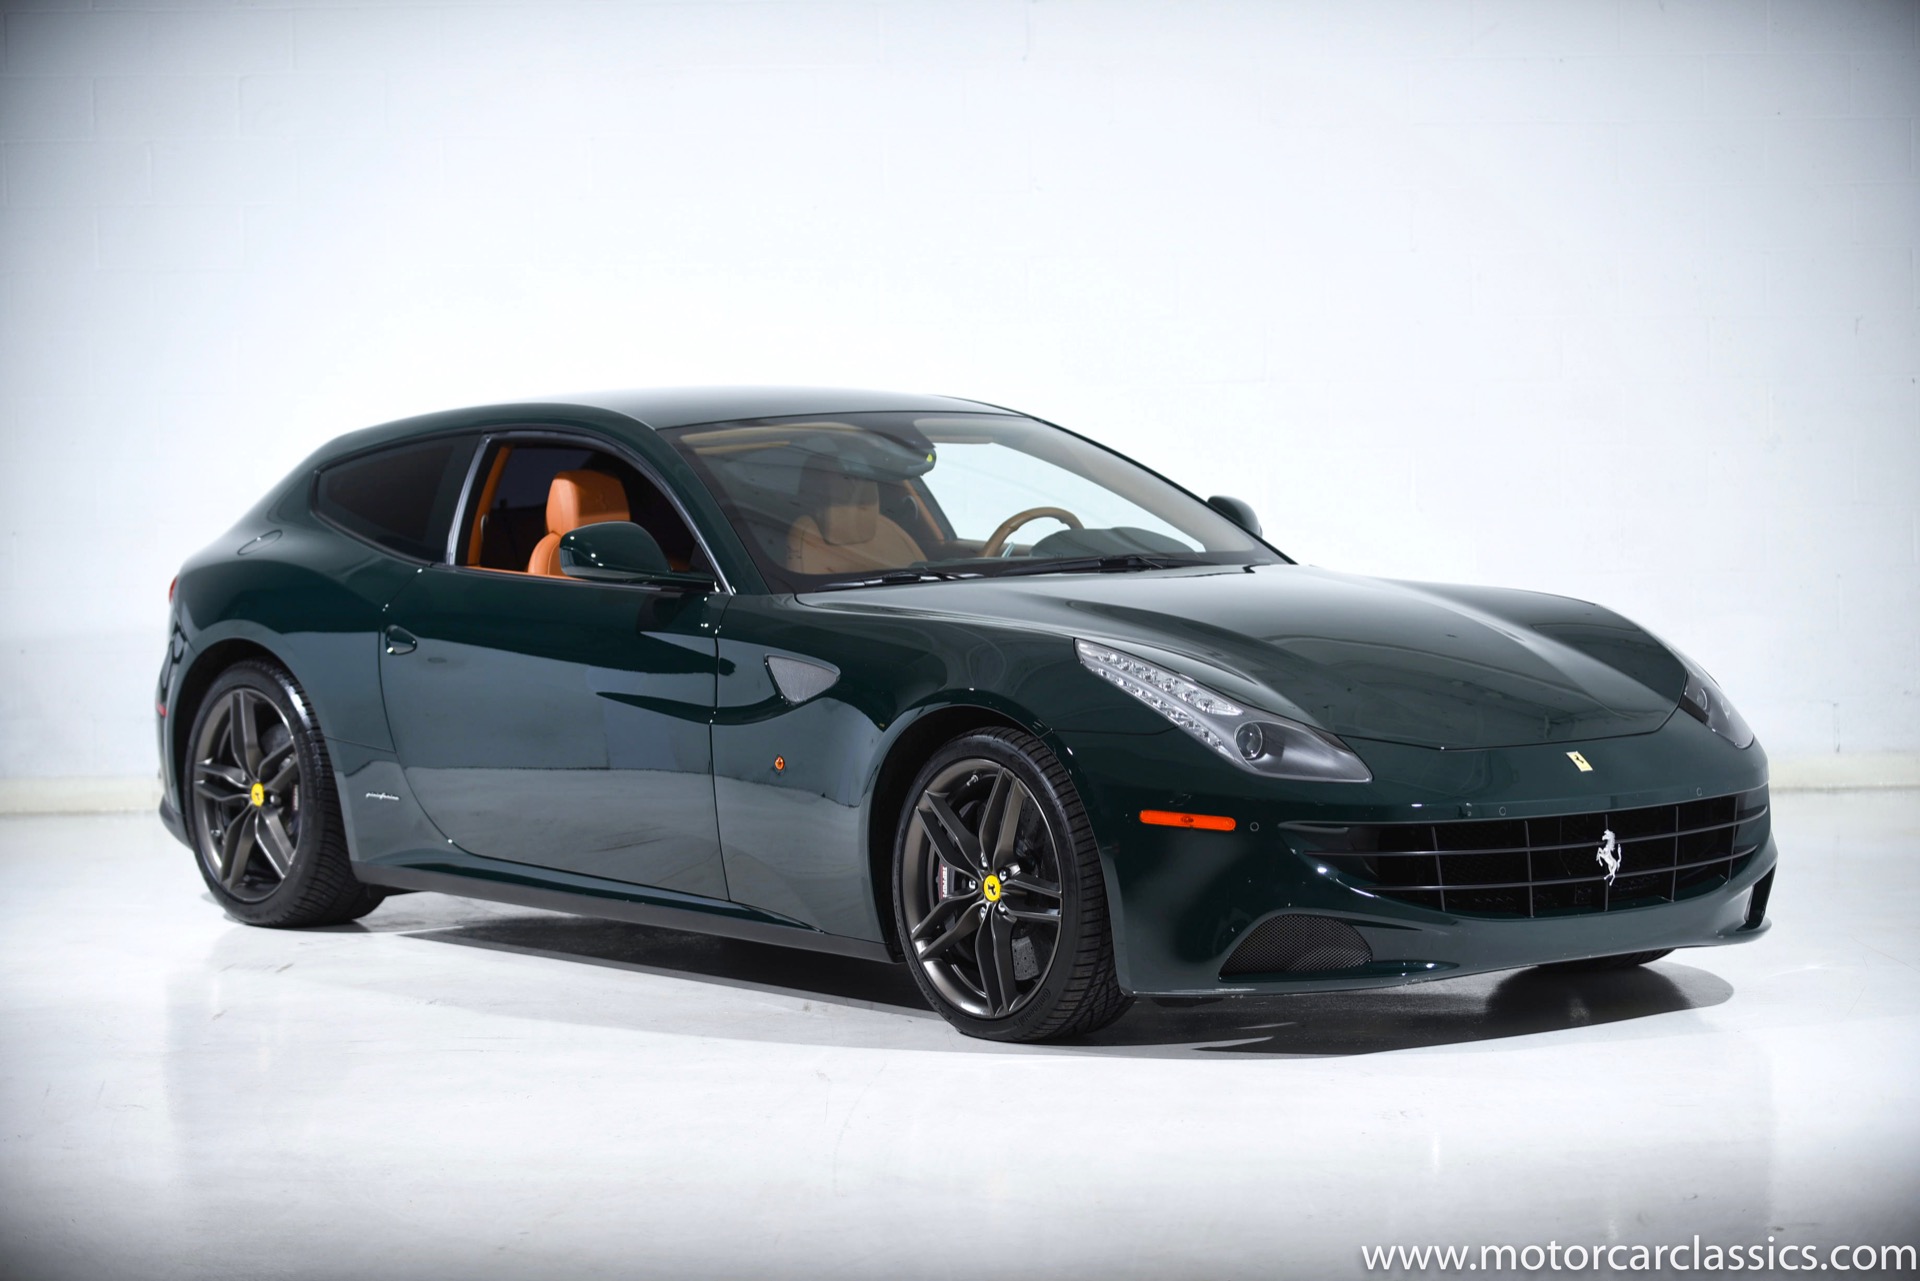 Used 2012 Ferrari FF For Sale ($137,900) | Motorcar Classics Stock #1418